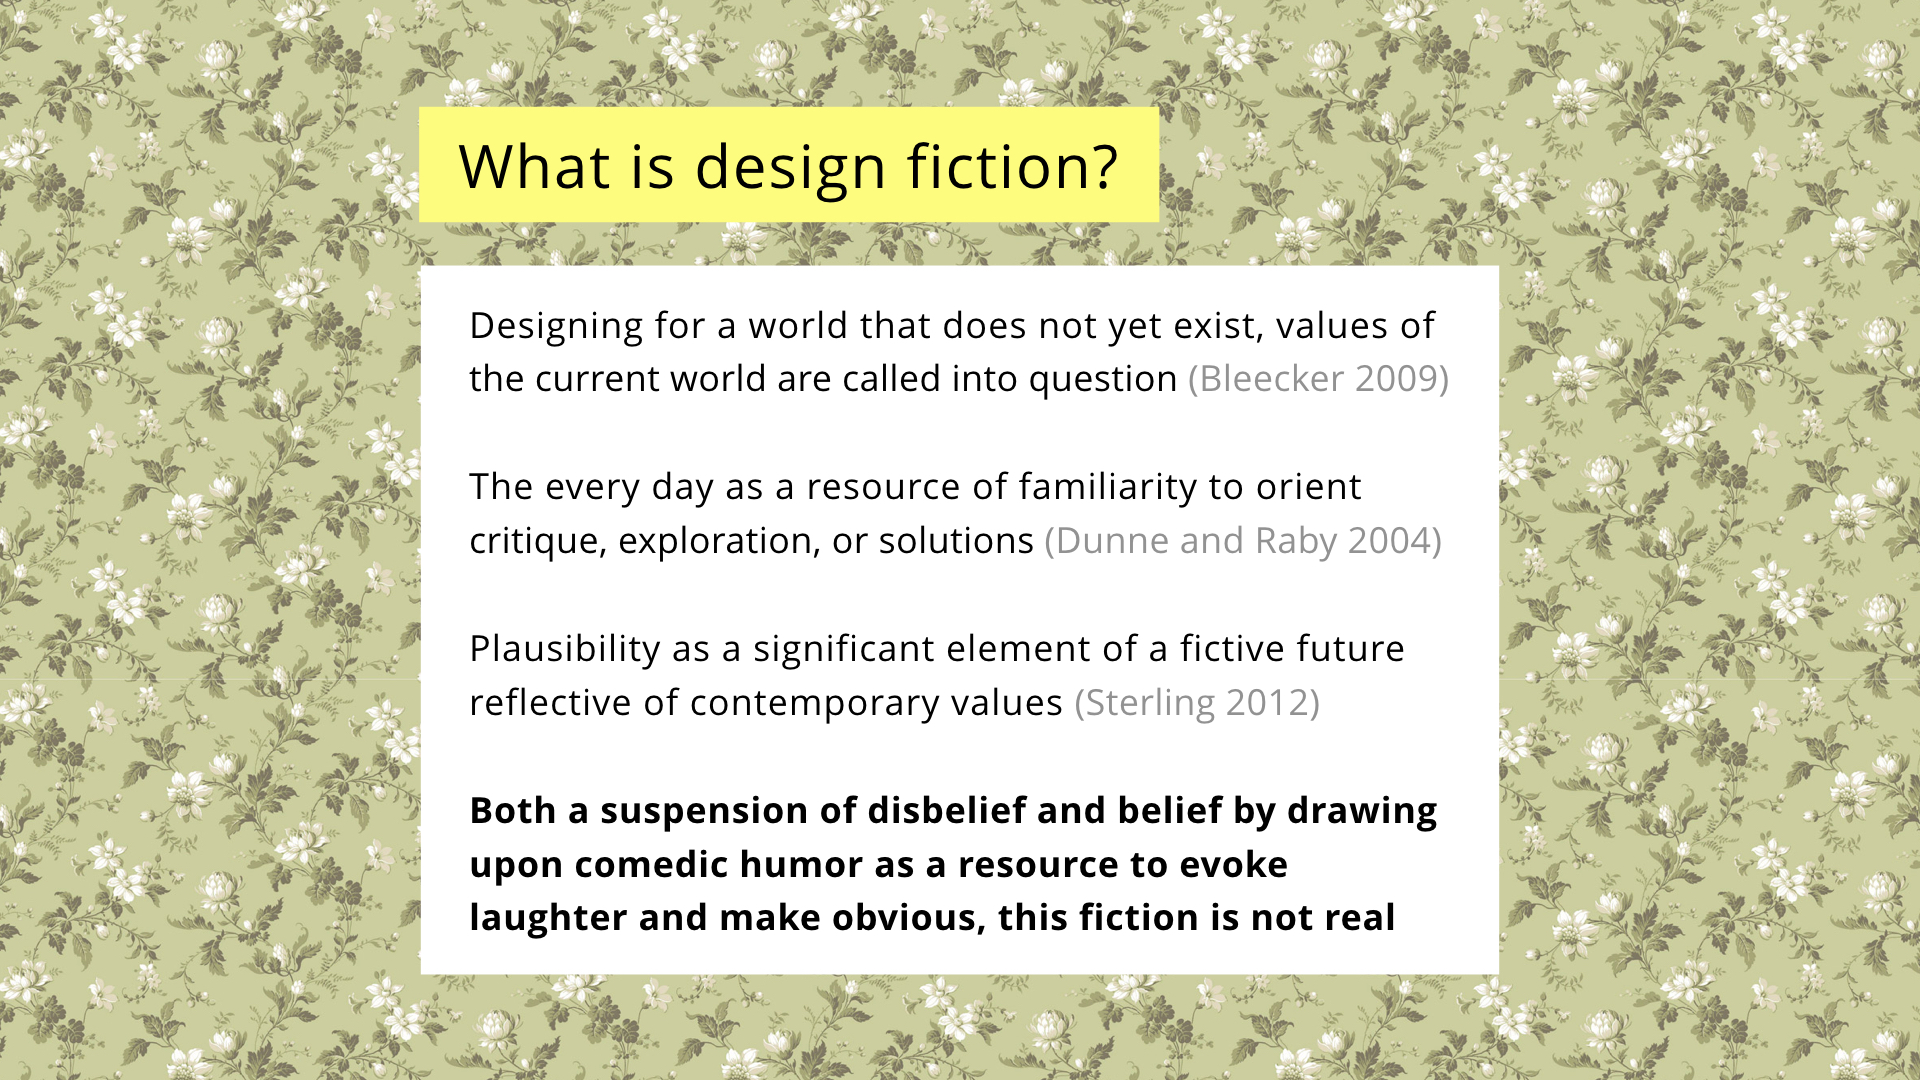 NordiCHI future scenarios presentation: What is design fiction?